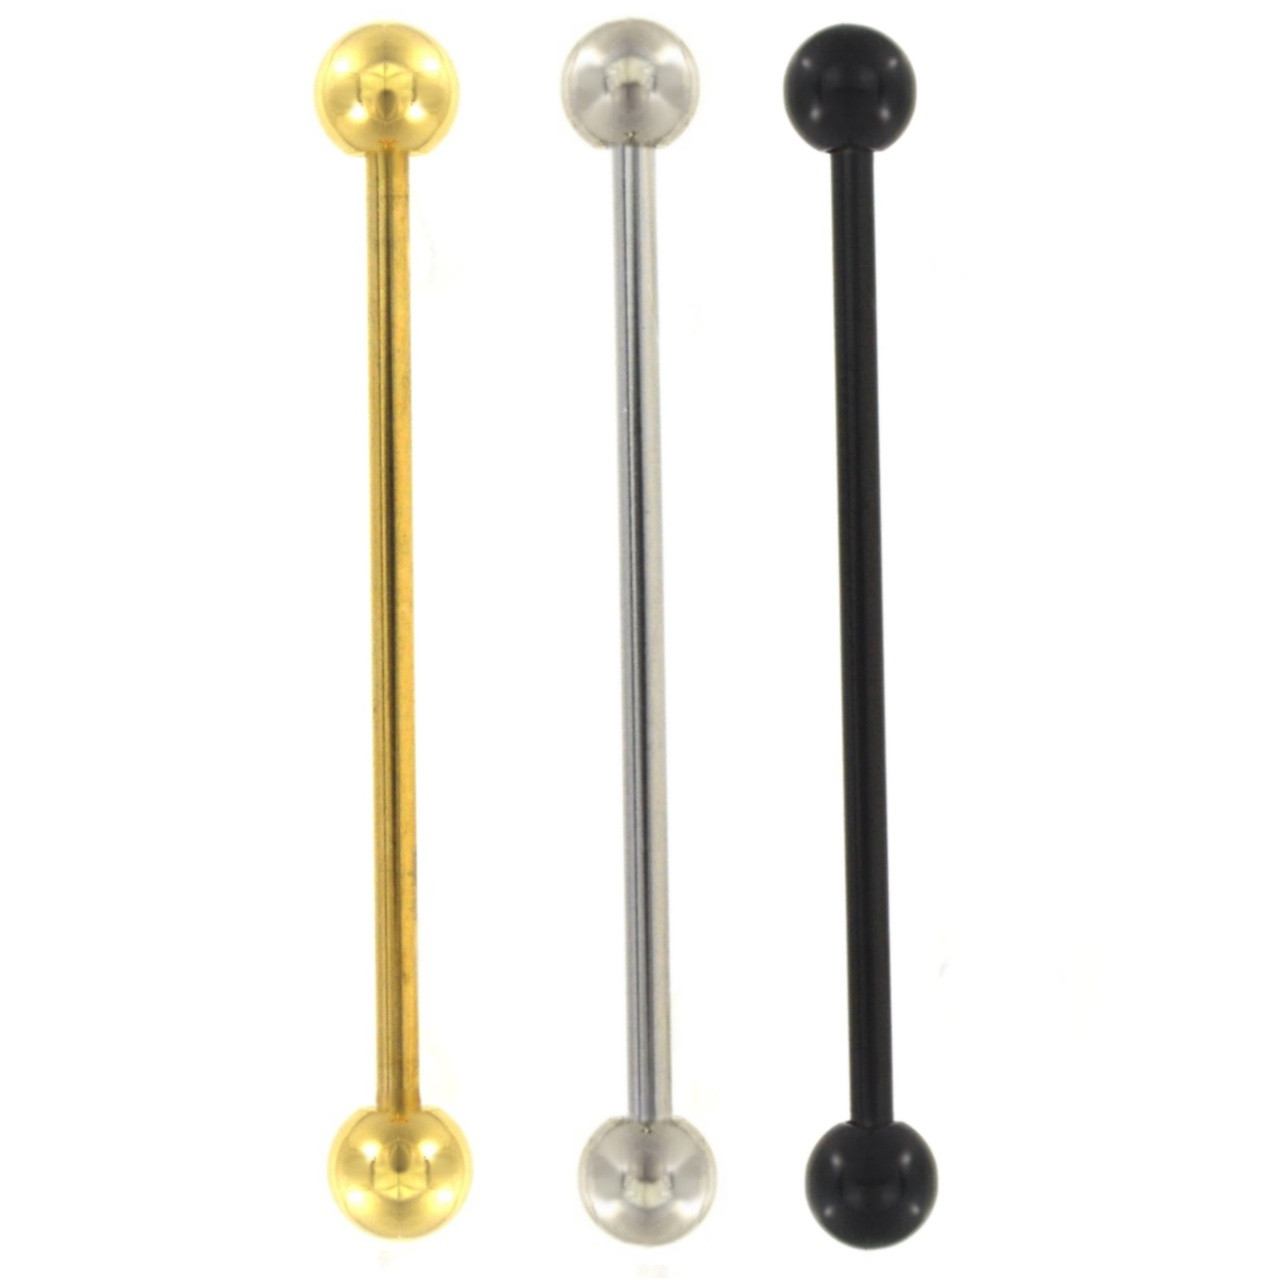 Set of 3 Colors Industrial Piercing Barbells 14G ...
